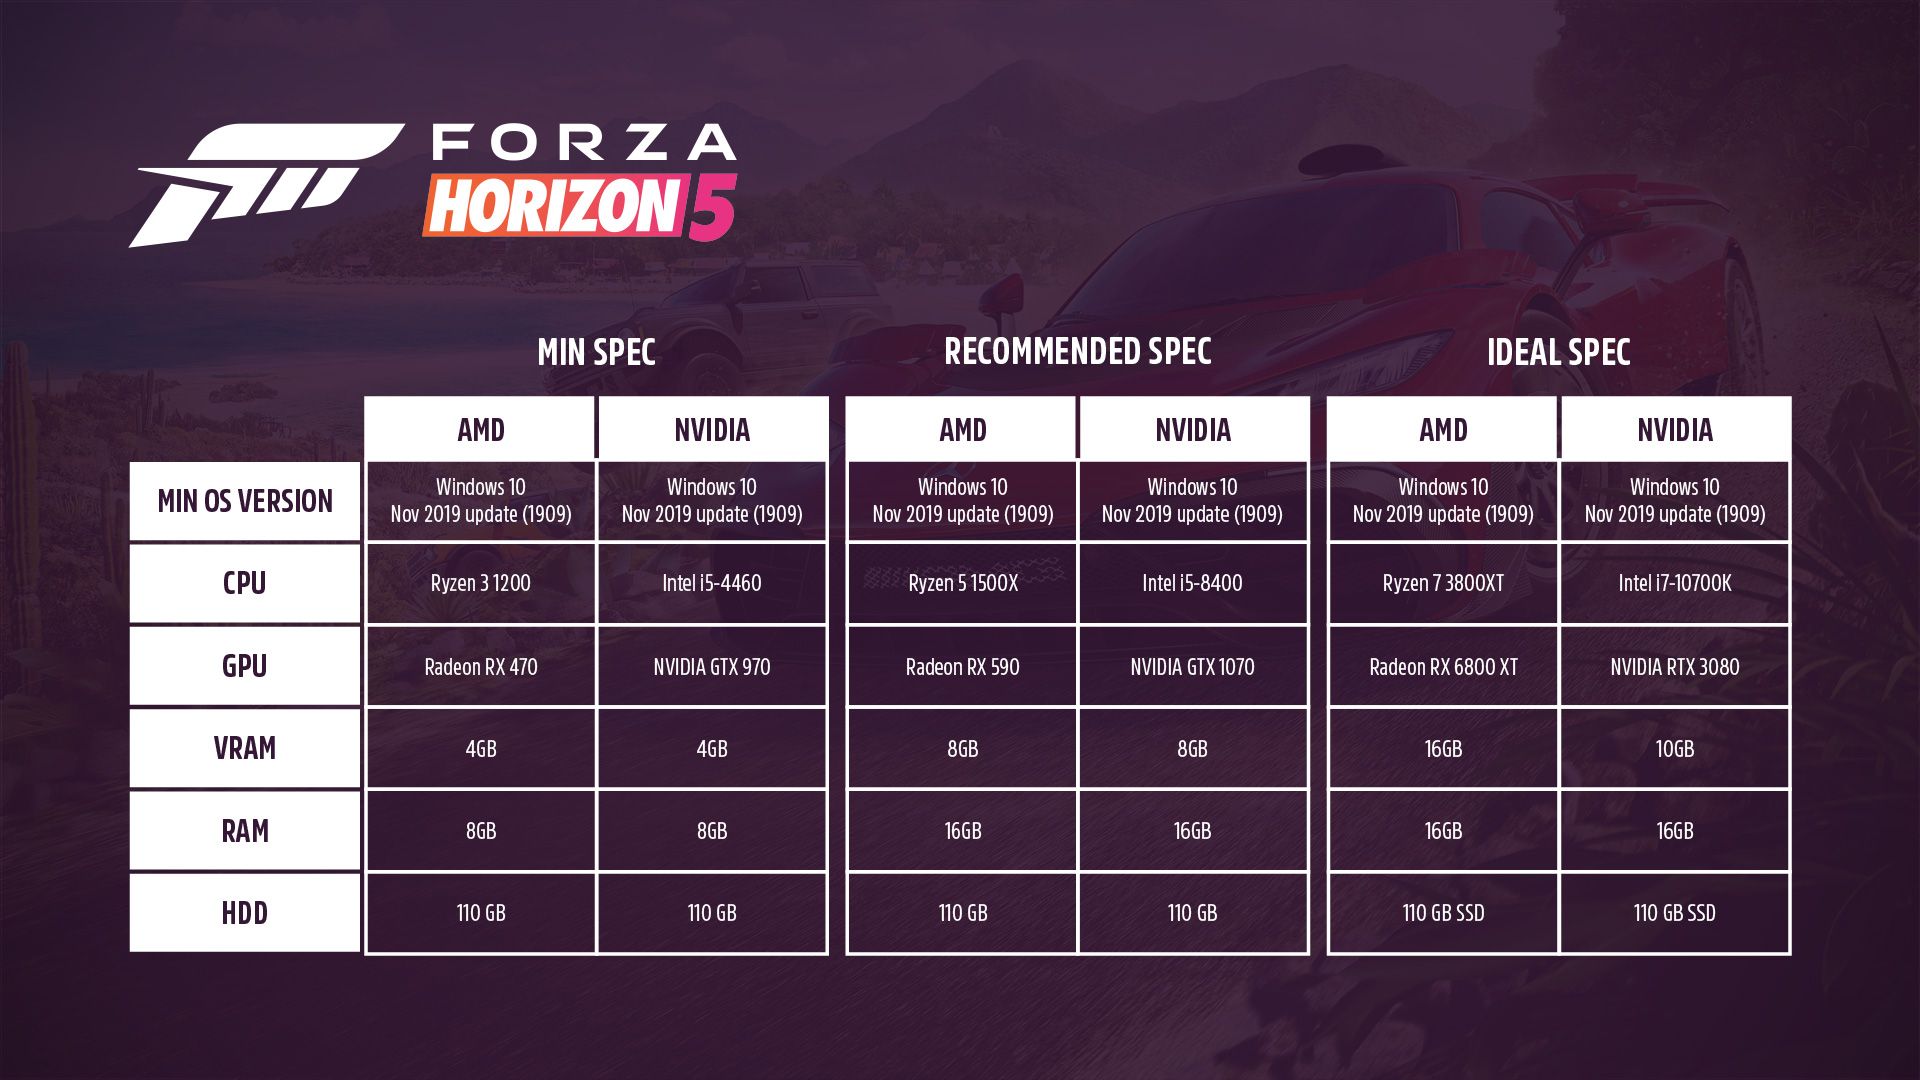 Forza Horizon 5 - Ray Tracing PC Requirements